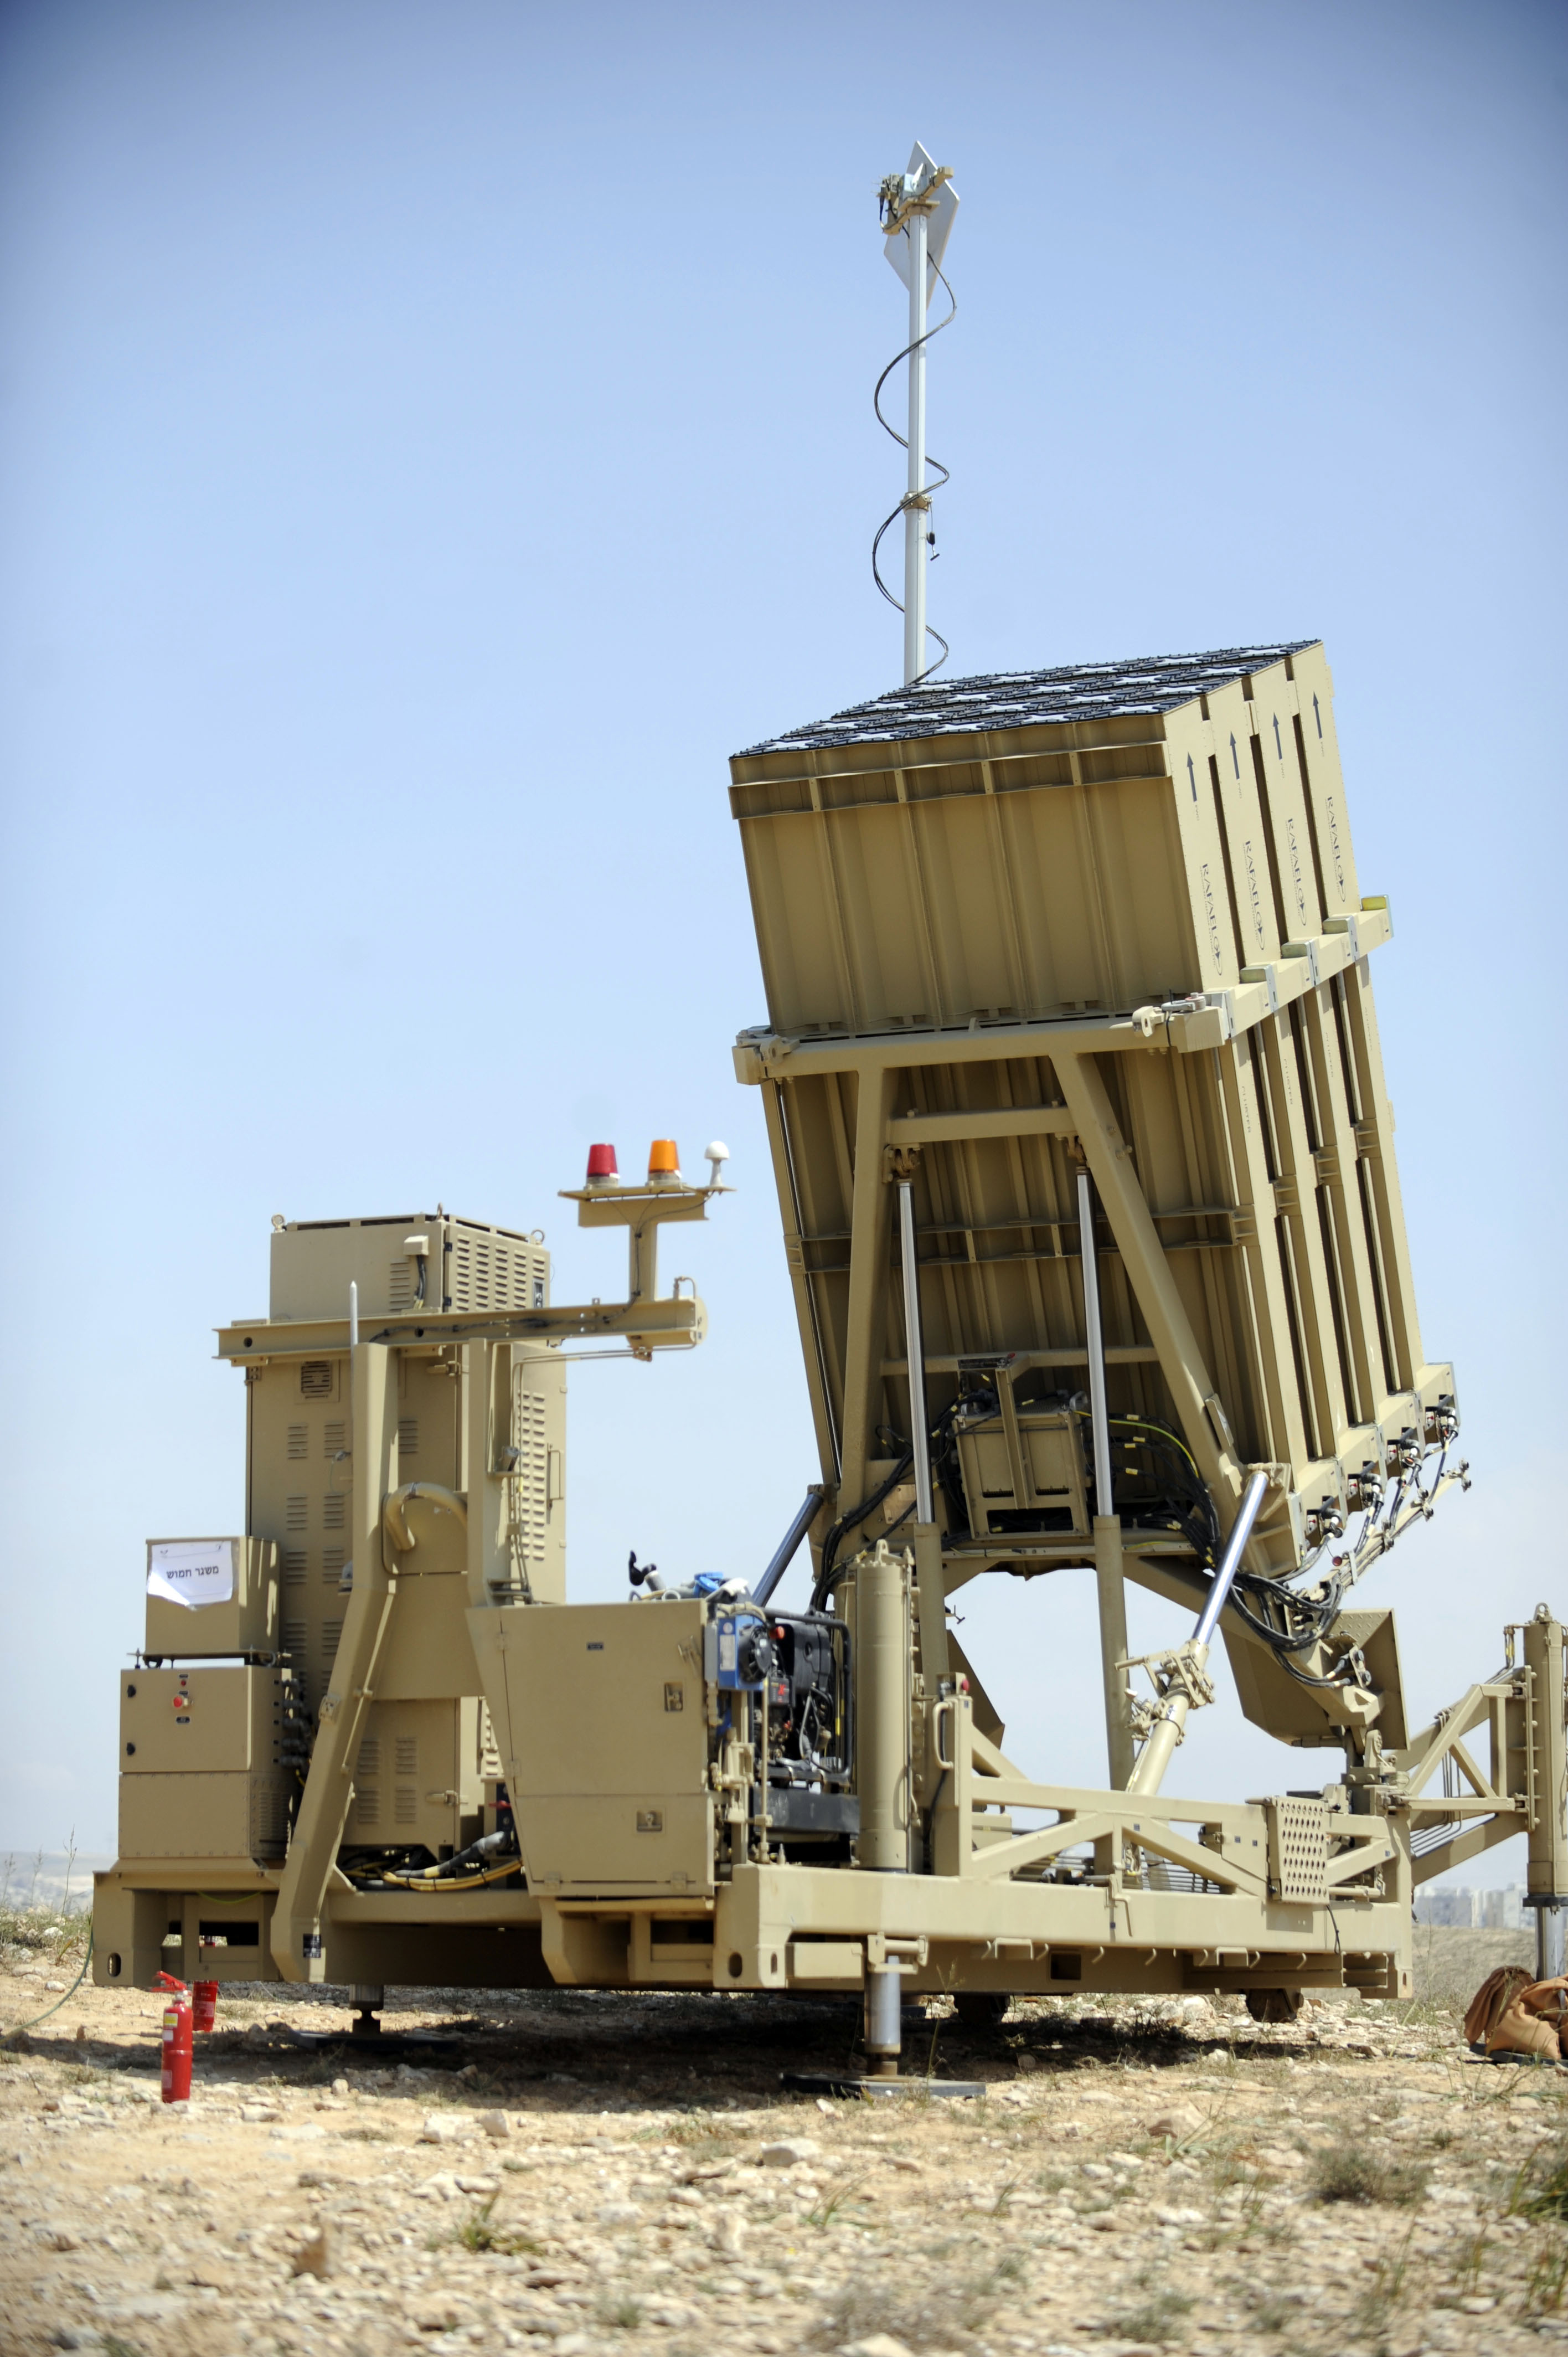 Iron_Dome_Battery_Deployed_Near_Ashkelon.jpg